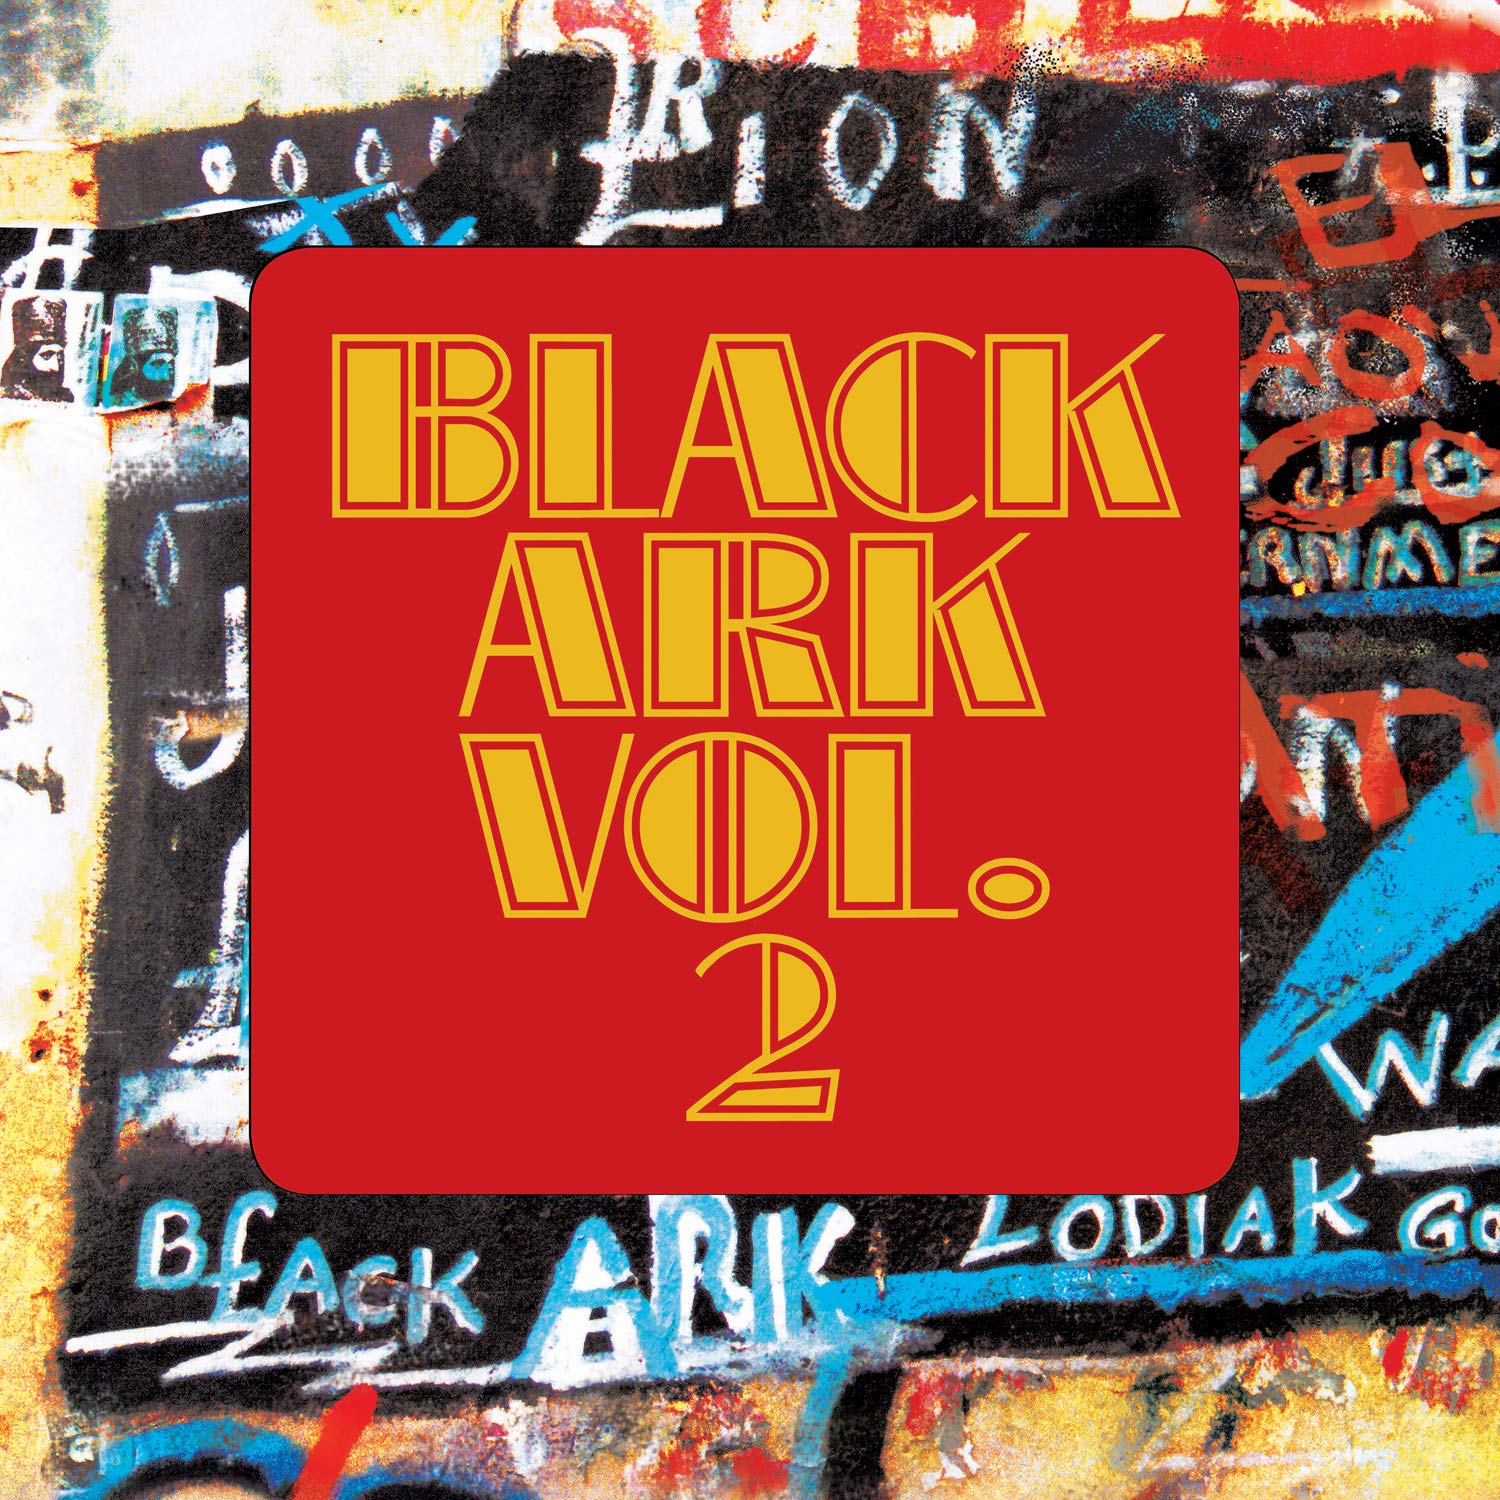 VARIOUS - BLACK ARK VOL. 2 Vinyl LP